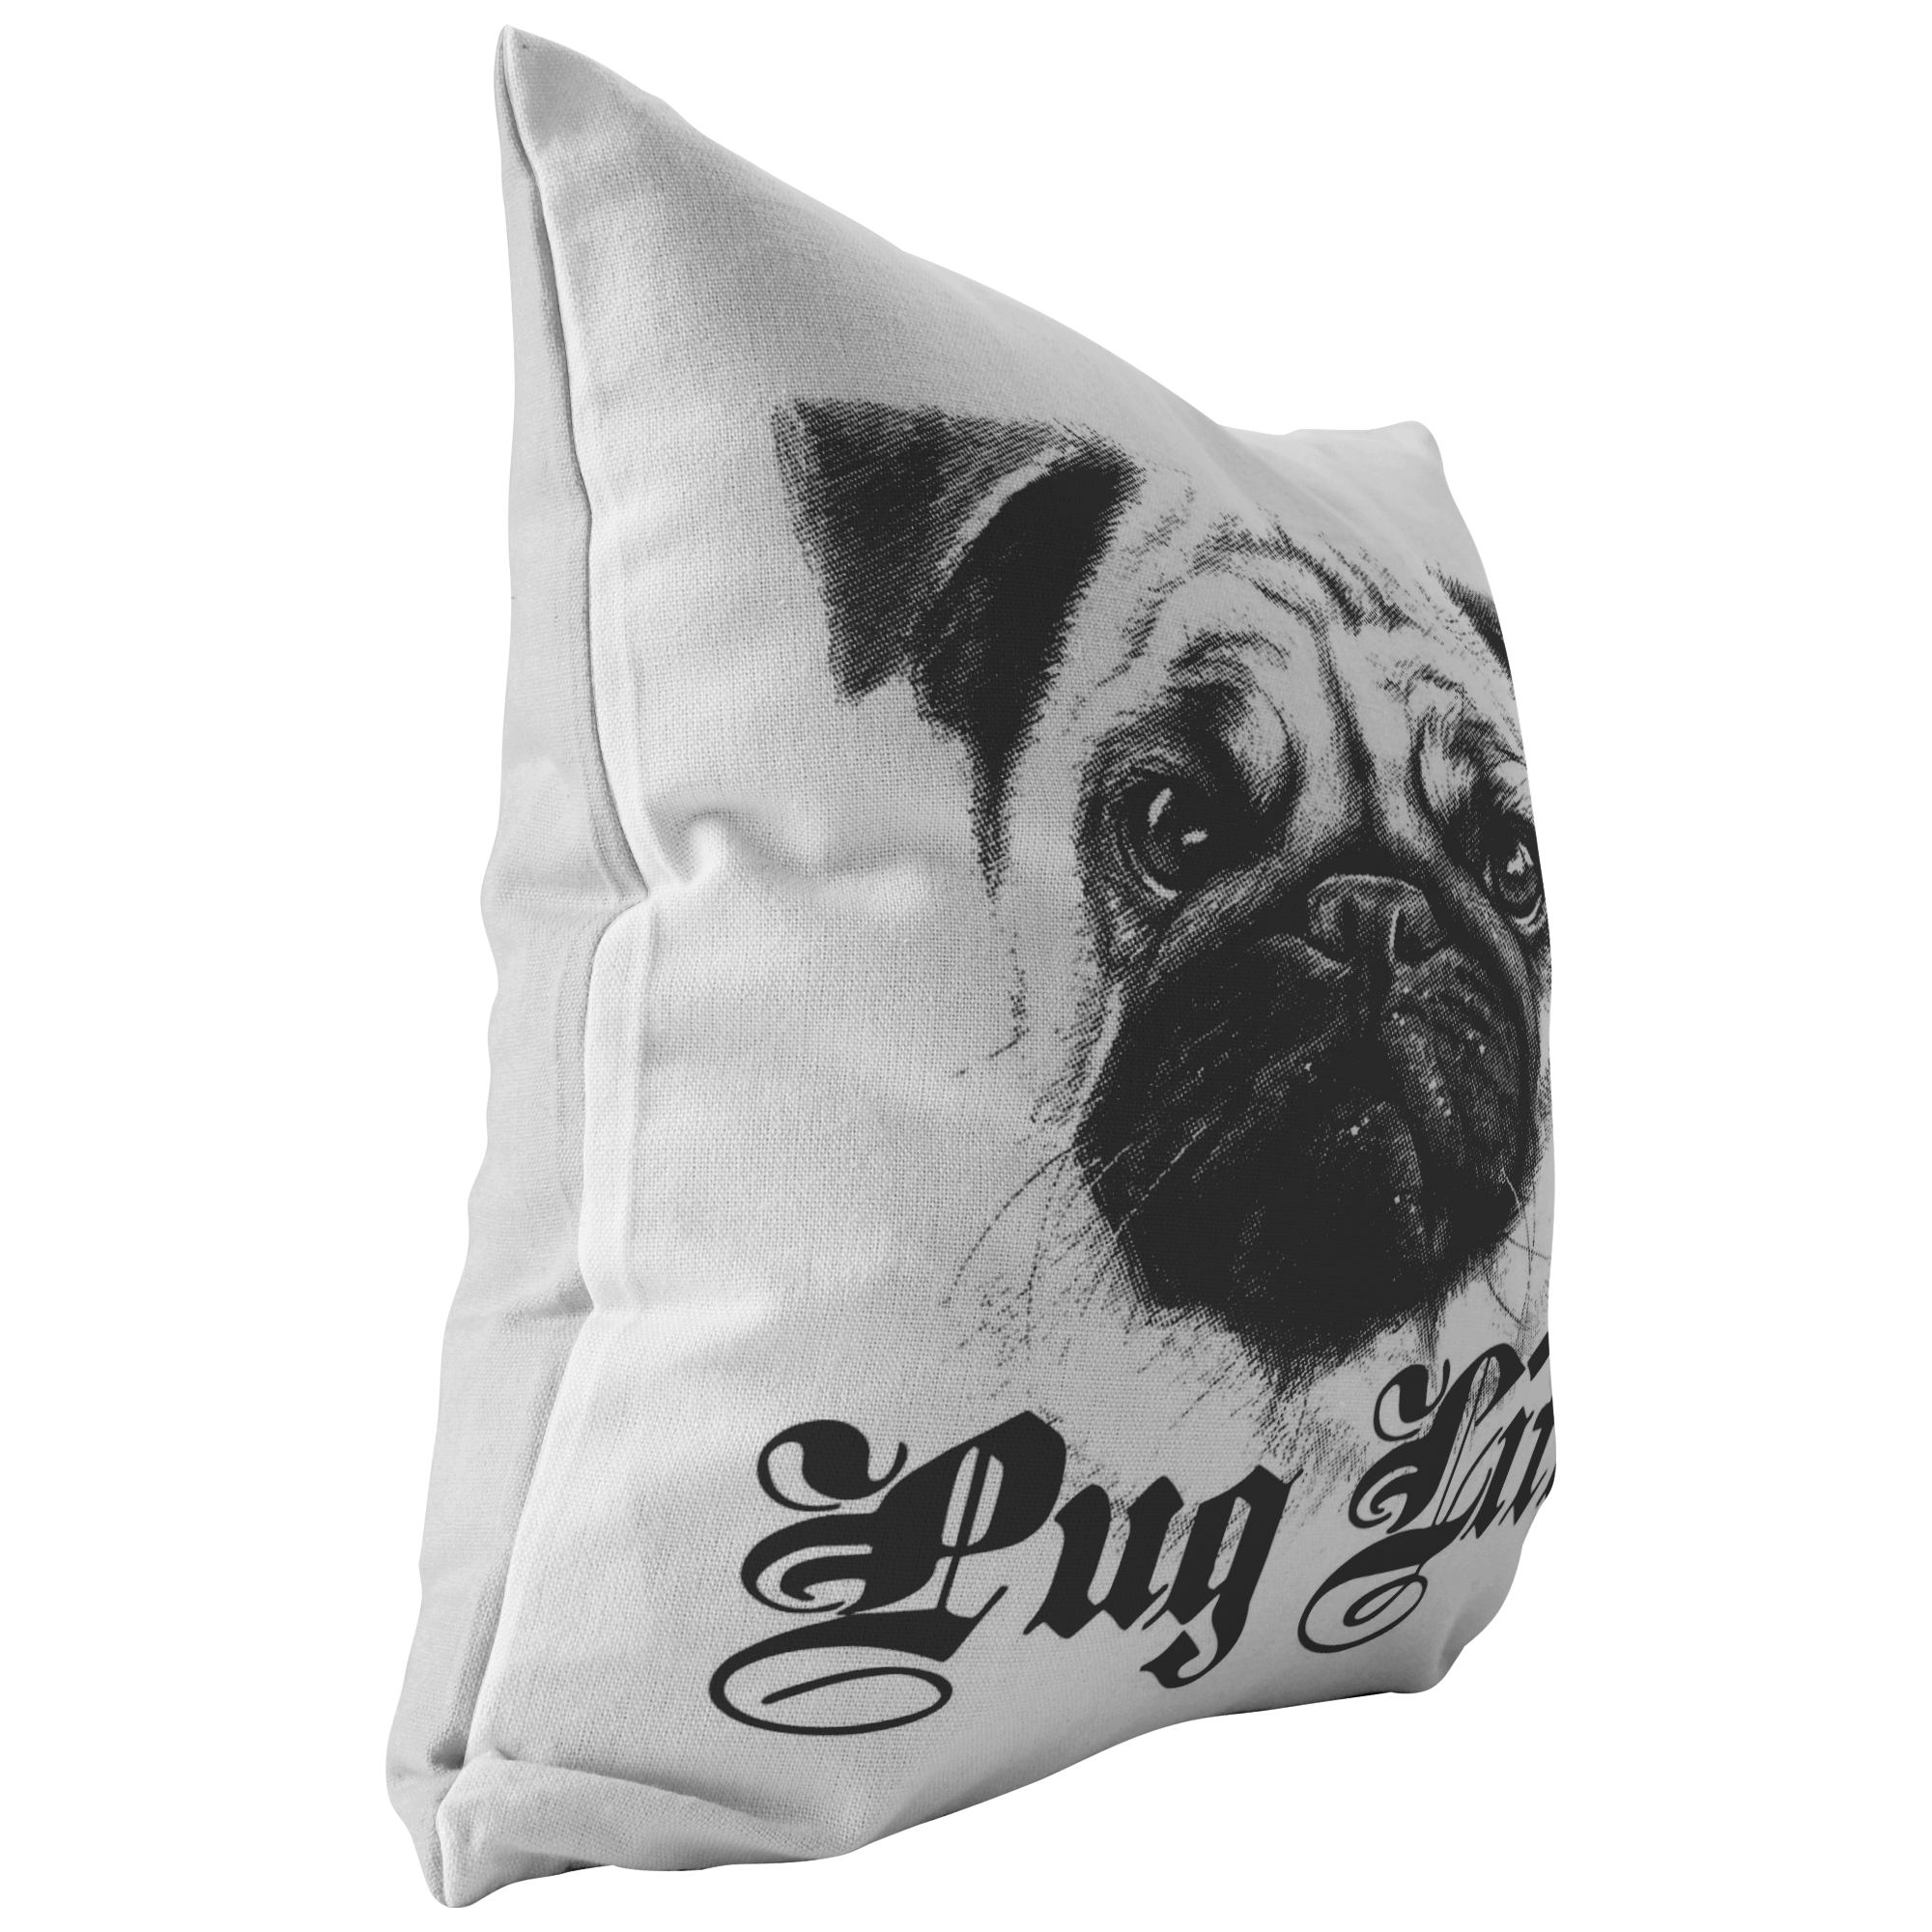 Pug Life - Pillow